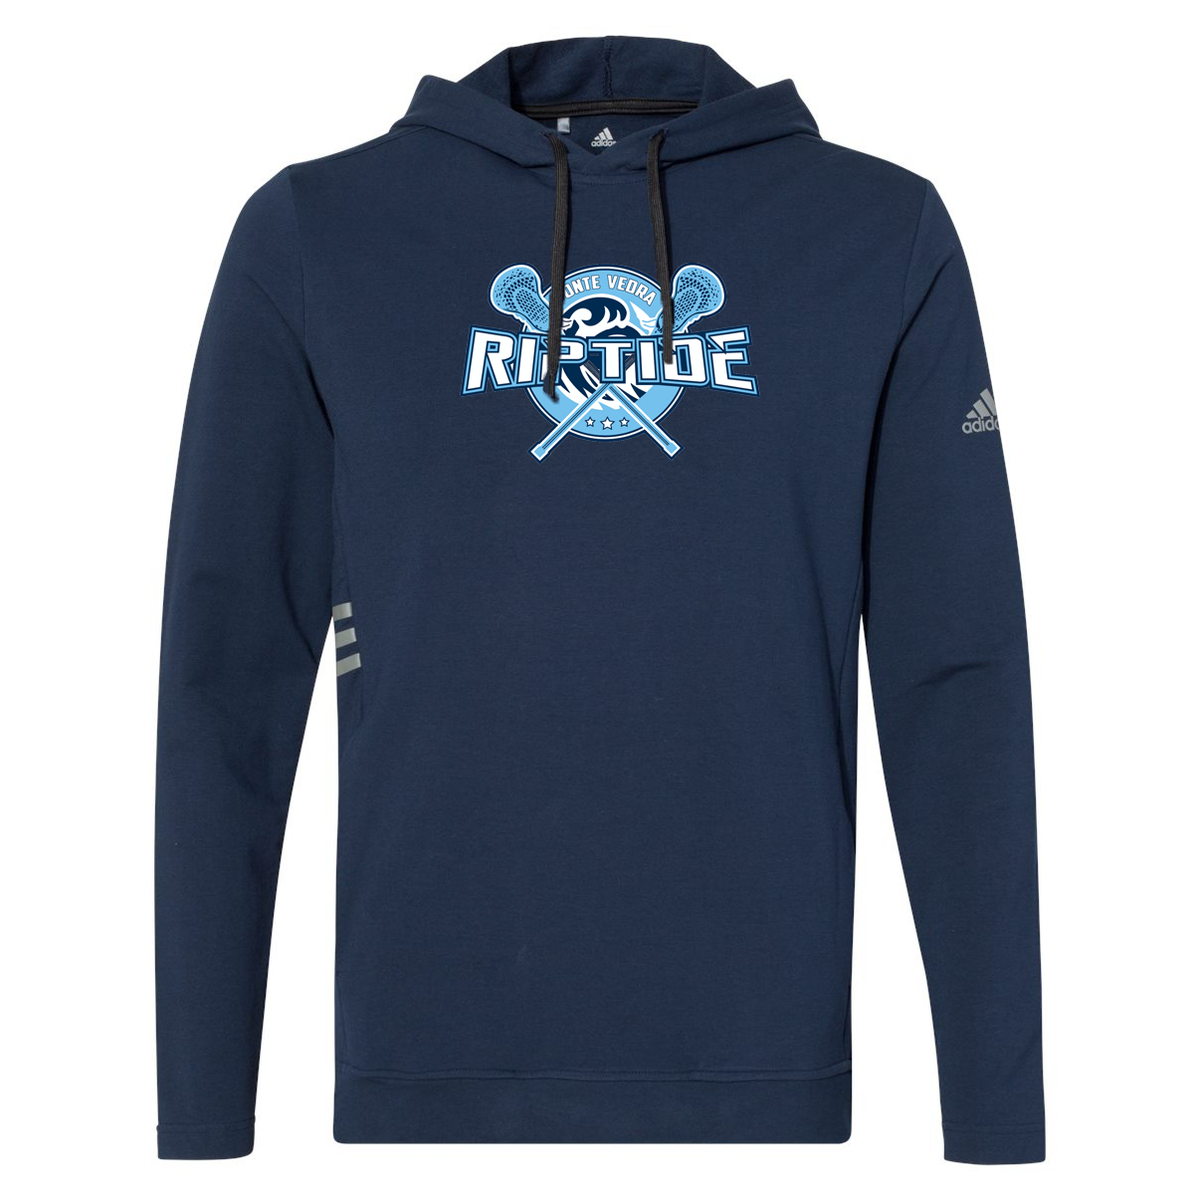 Ponte Vedra Riptide Lacrosse Adidas Lightweight Sweatshirt